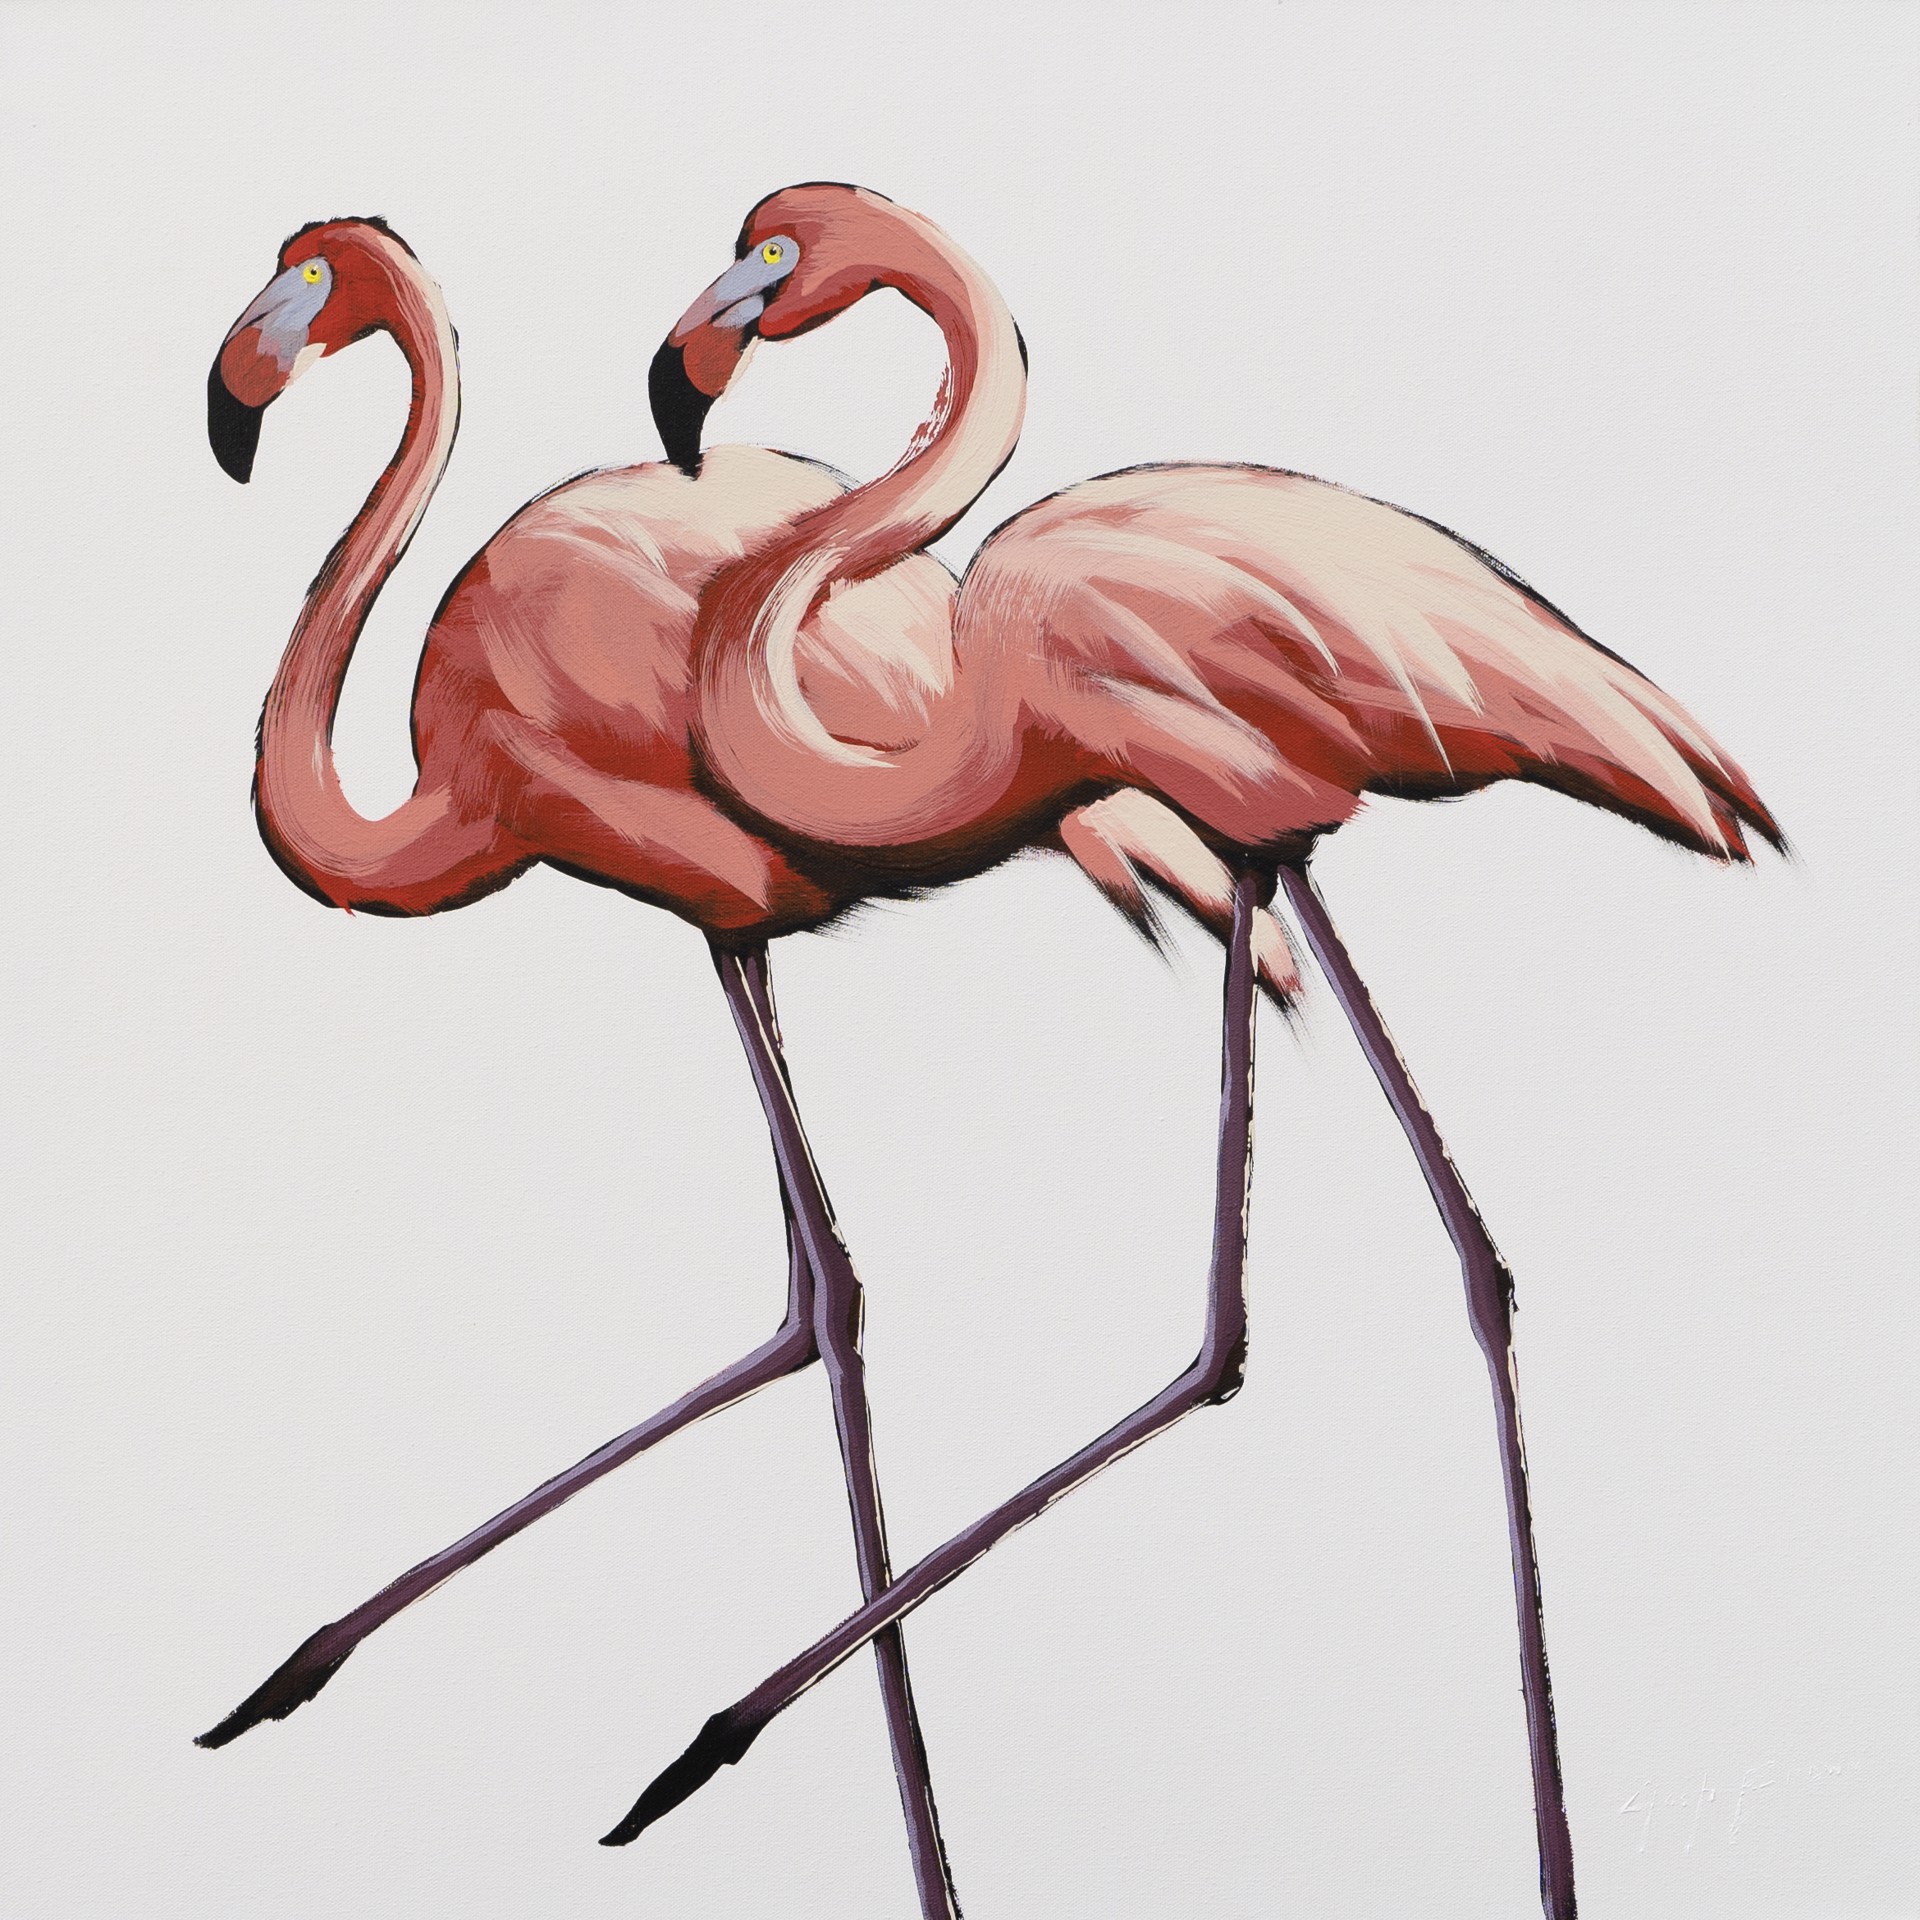 Two Flamingos on White by Josh Brown